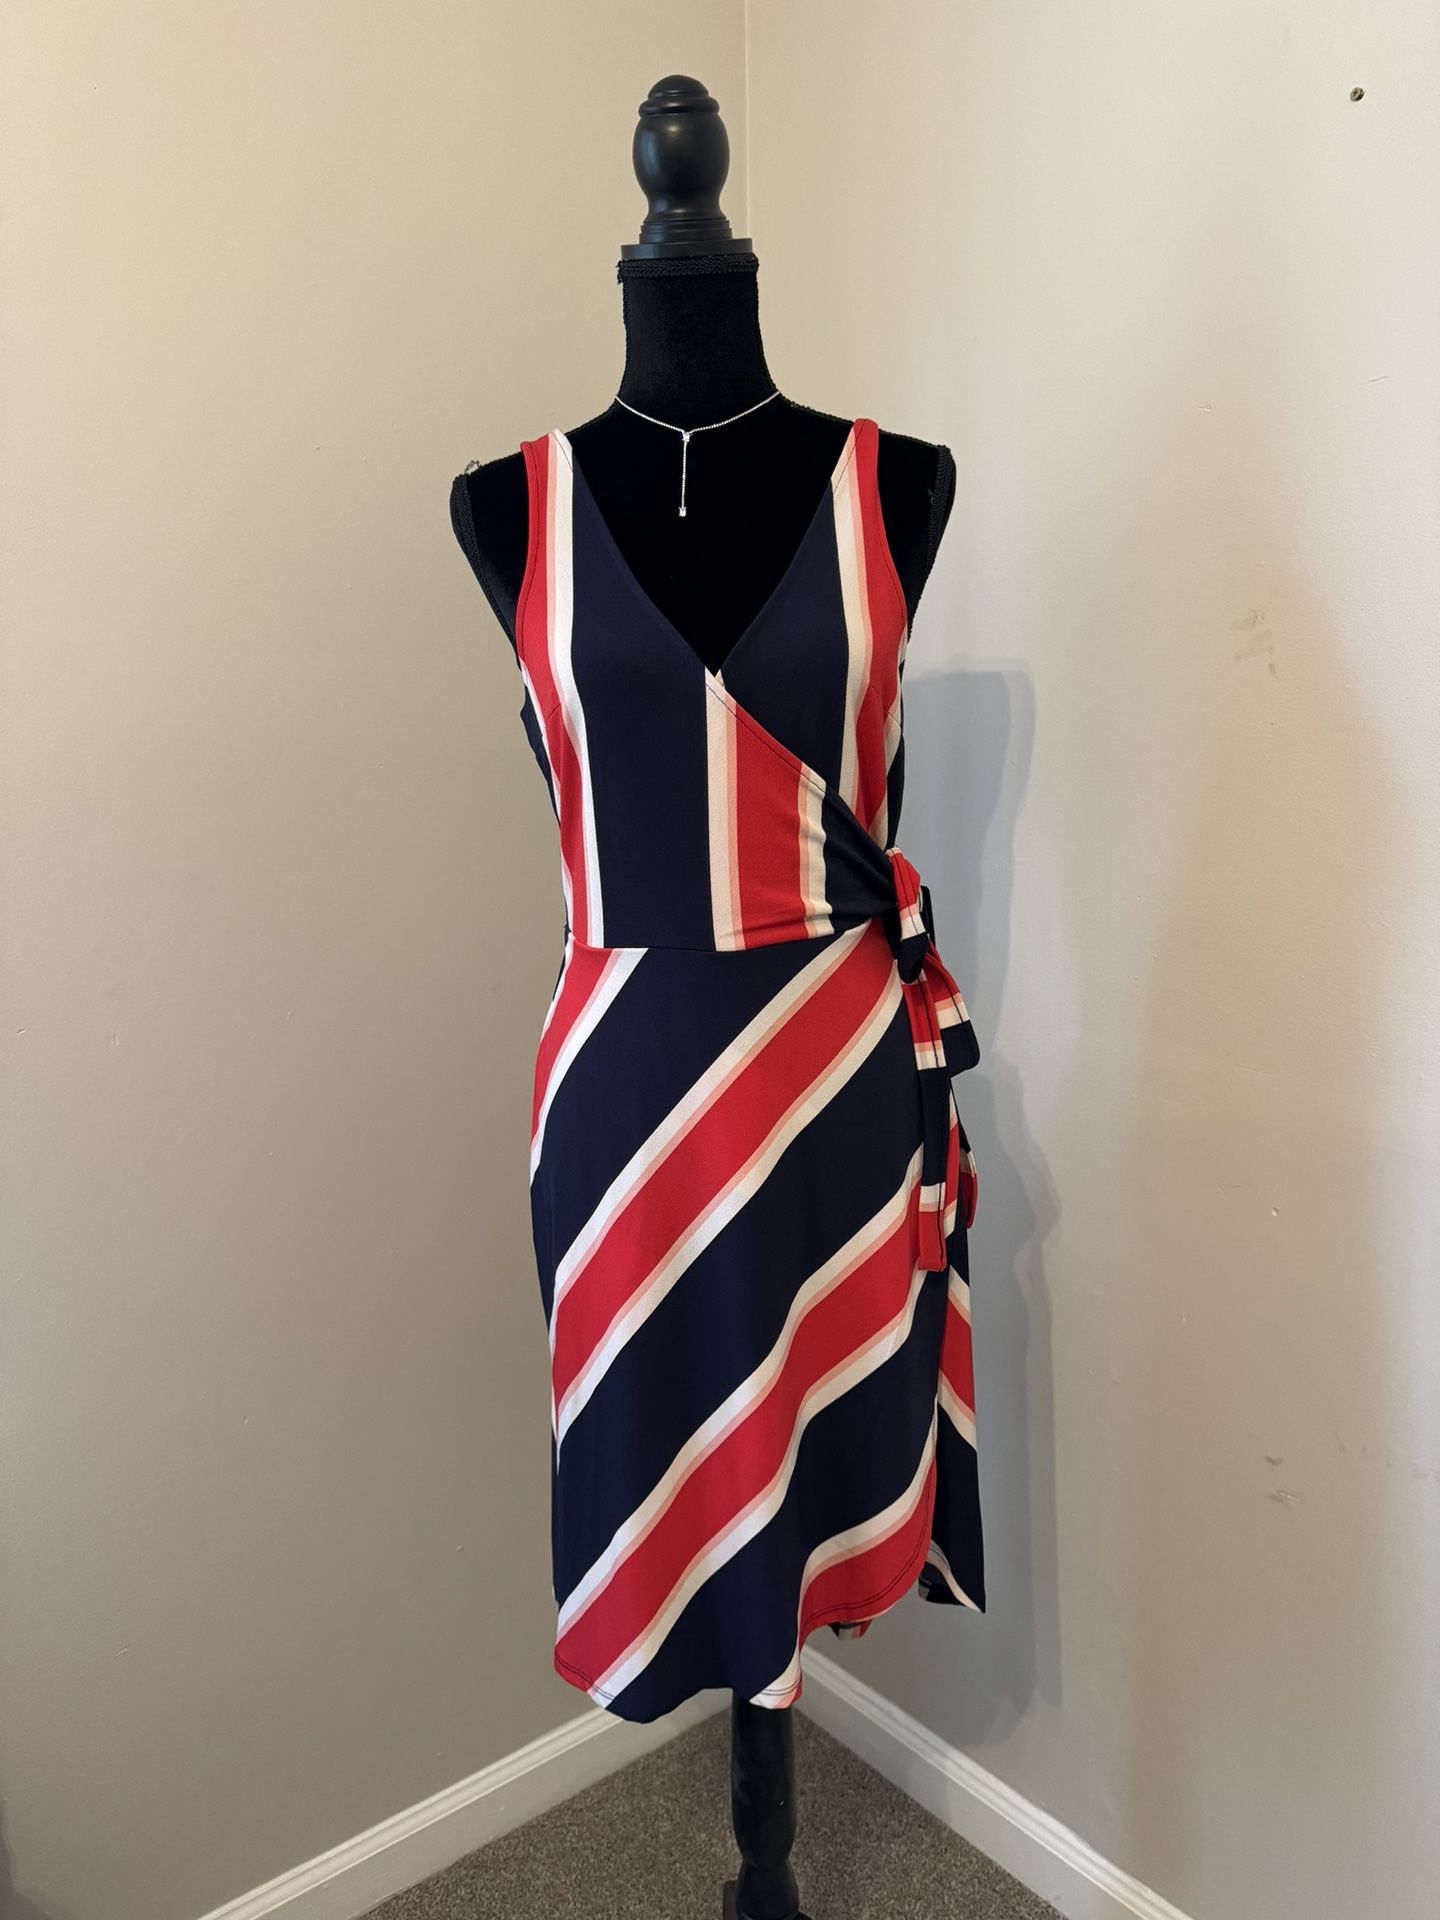 New! Express Striped Wrap Dress Size M